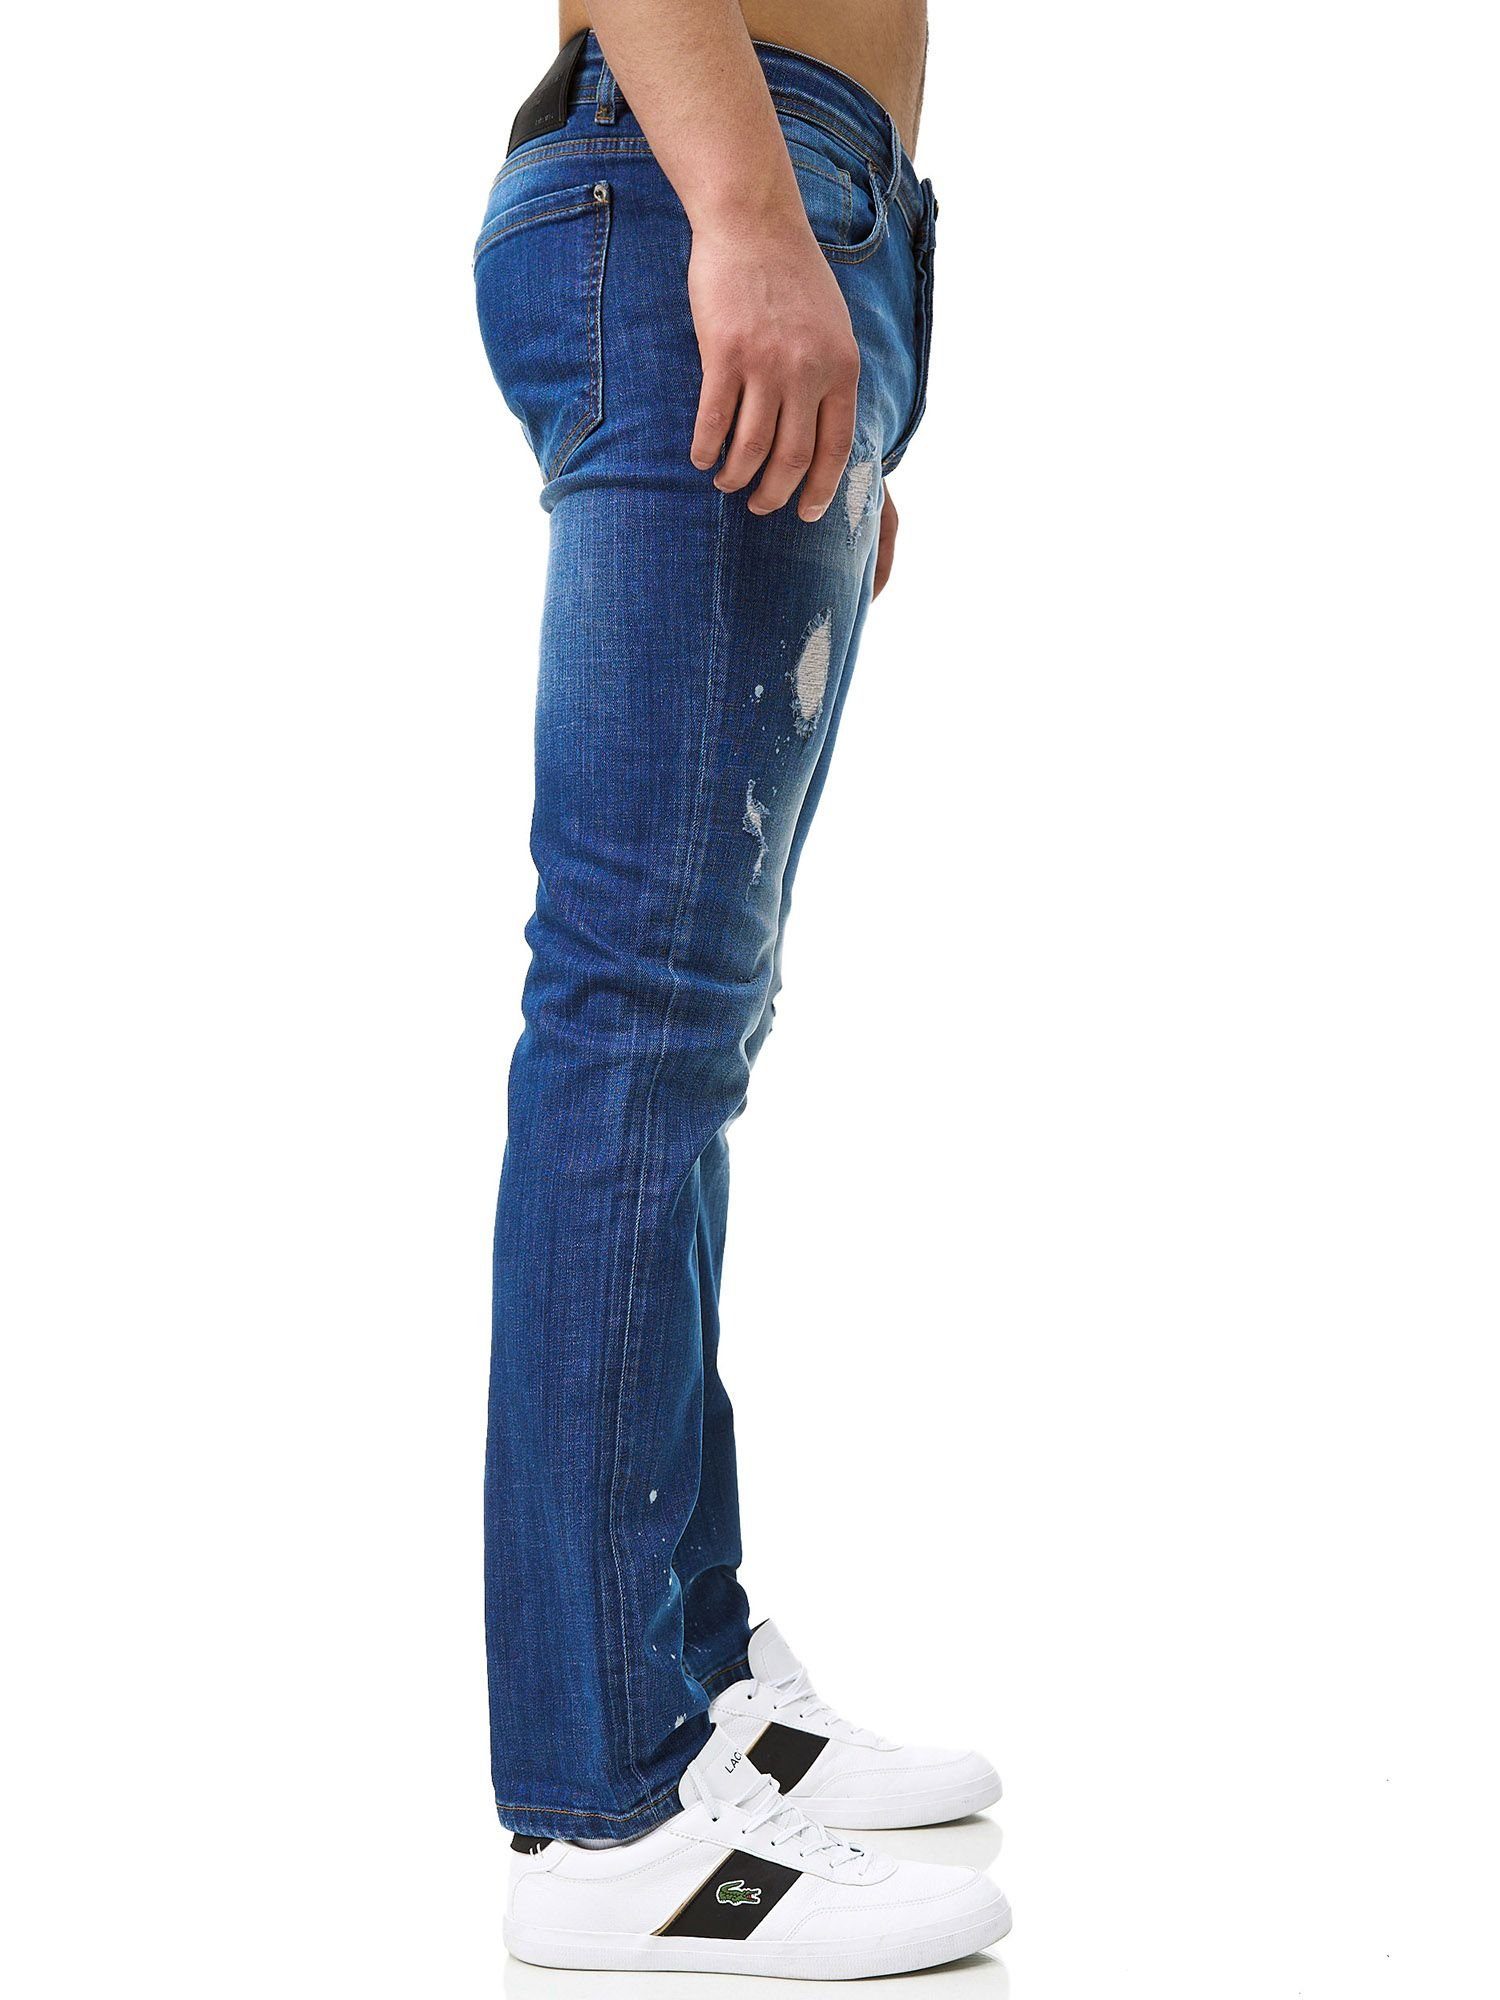 John Kayna Jeanshose Jeans Freizeit,Casual Herrenhose Designer (Jeanshose Blau 1-tlg) Slim Slim-fit-Jeans Designerjeans Fit Bootcut, Herren Herrenjeans Denim J-710-JK